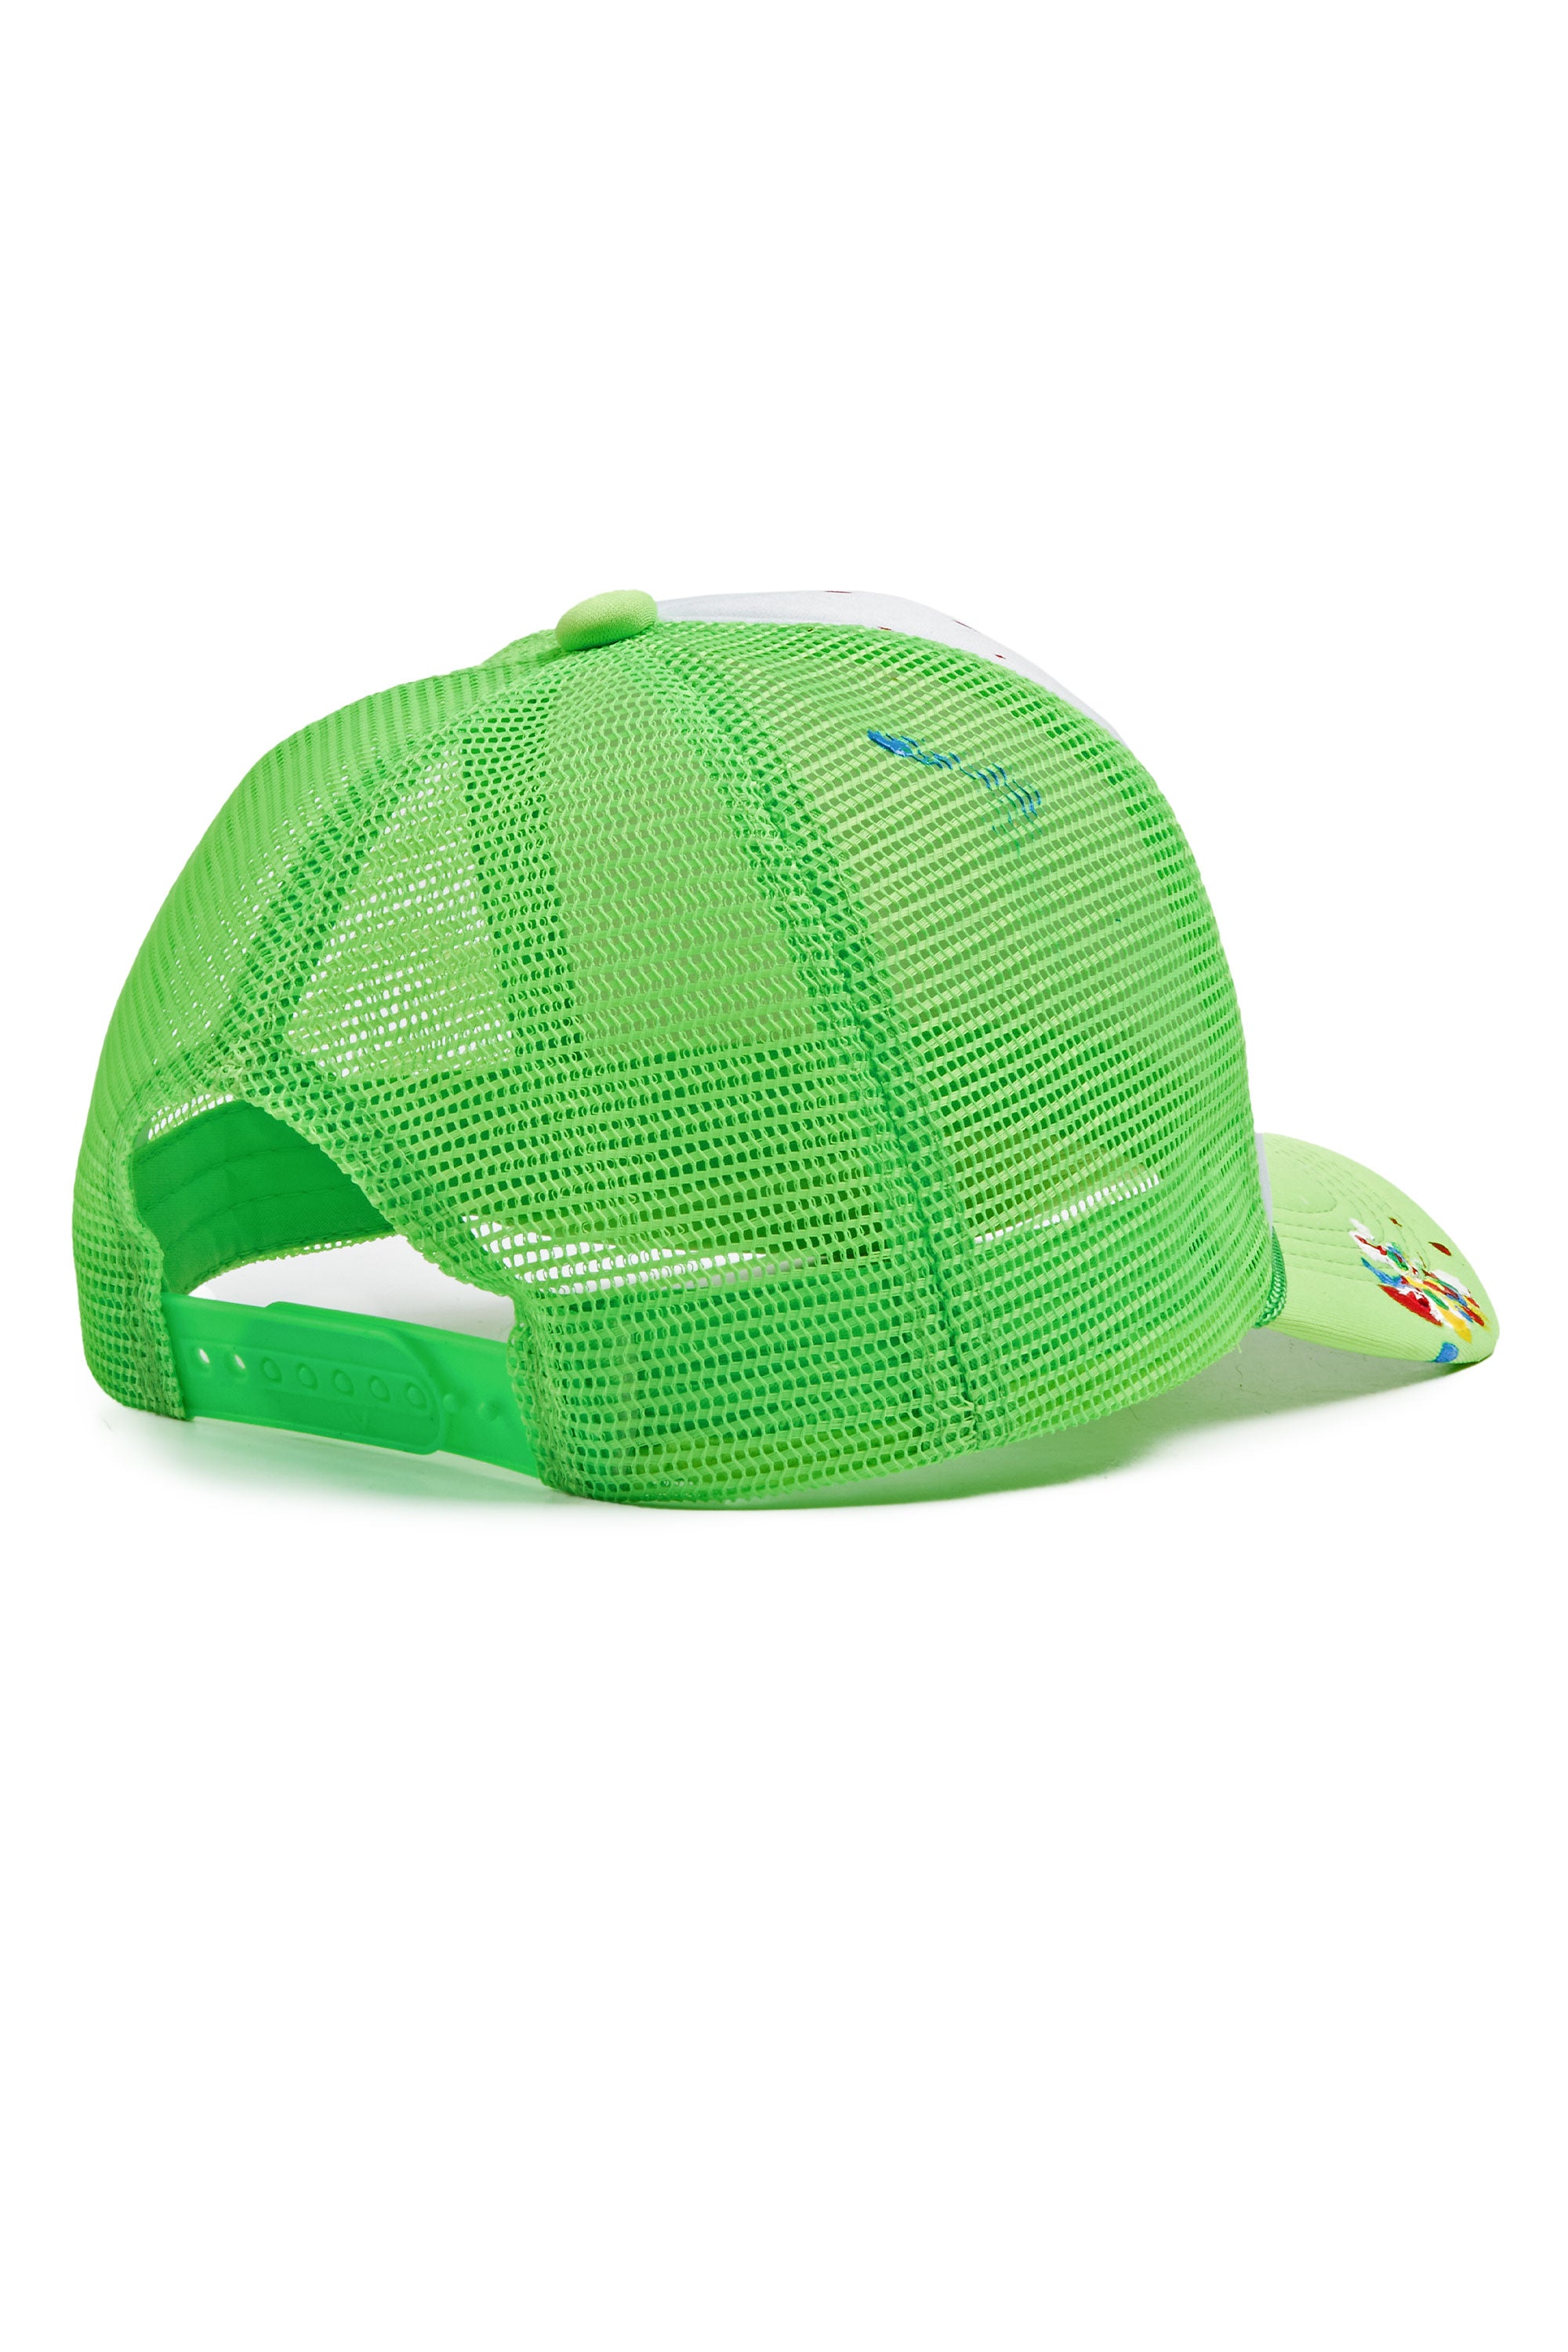 Neptune White/ Neon Green Trucker Hat